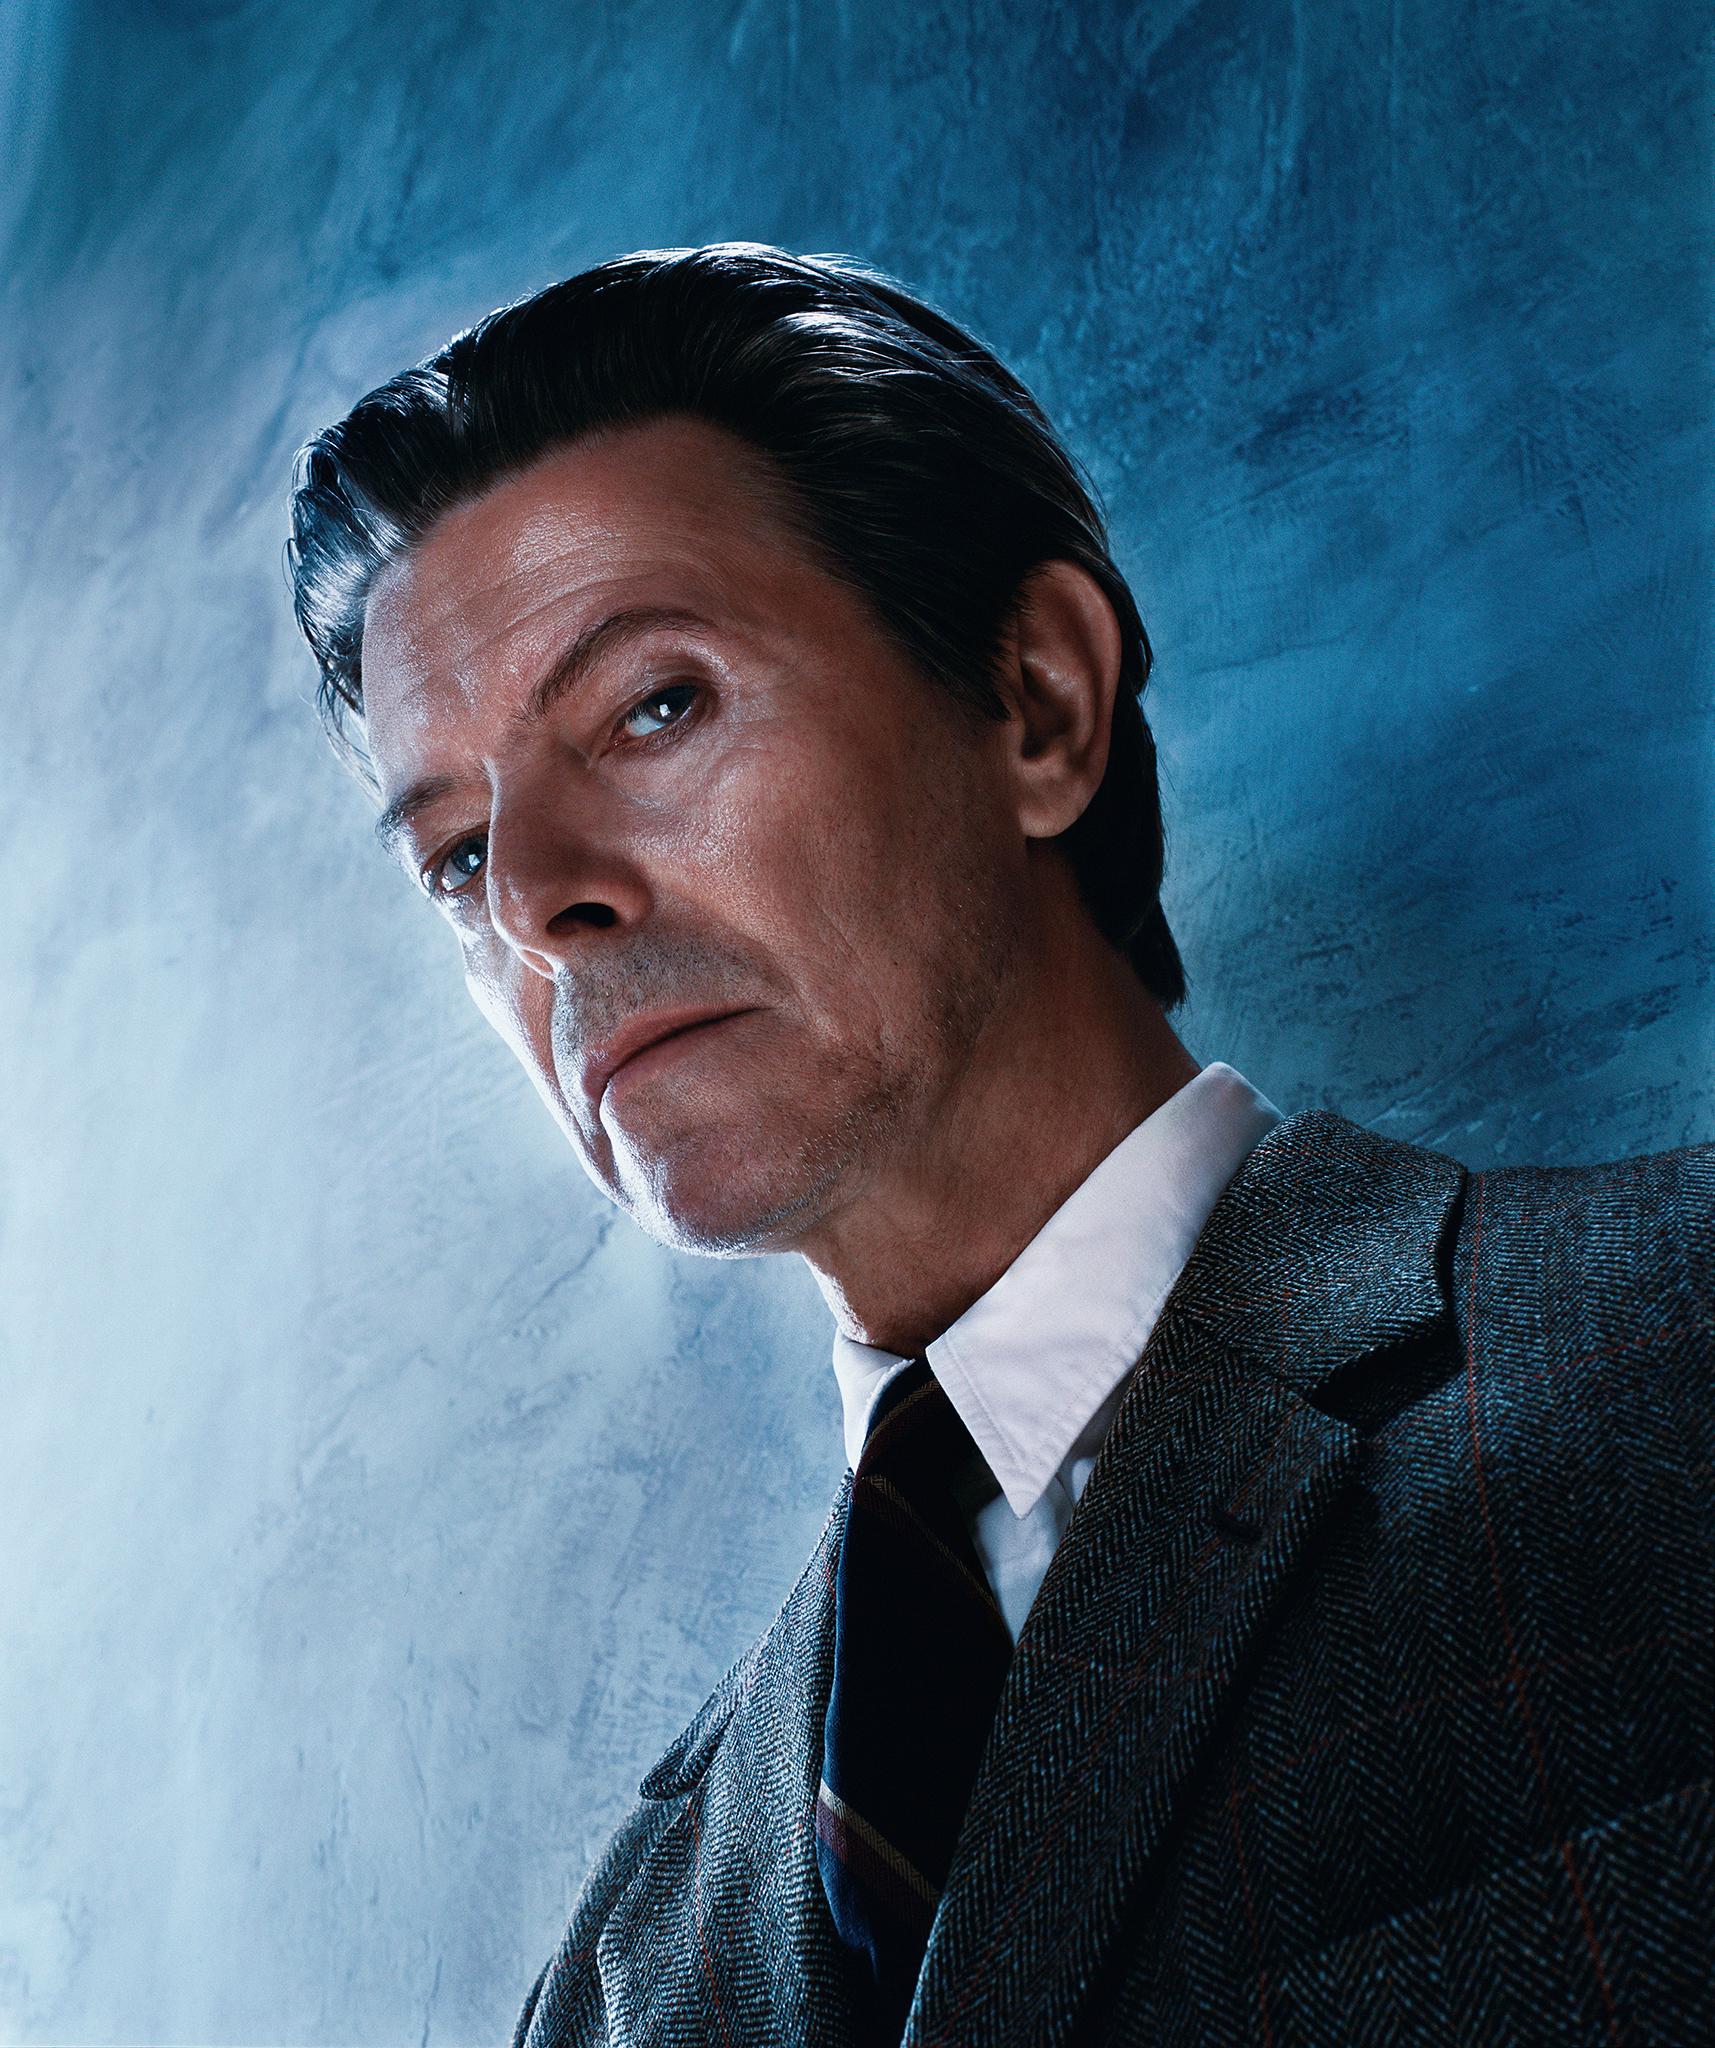 Markus Klinko Portrait Photograph - David Bowie : The Look